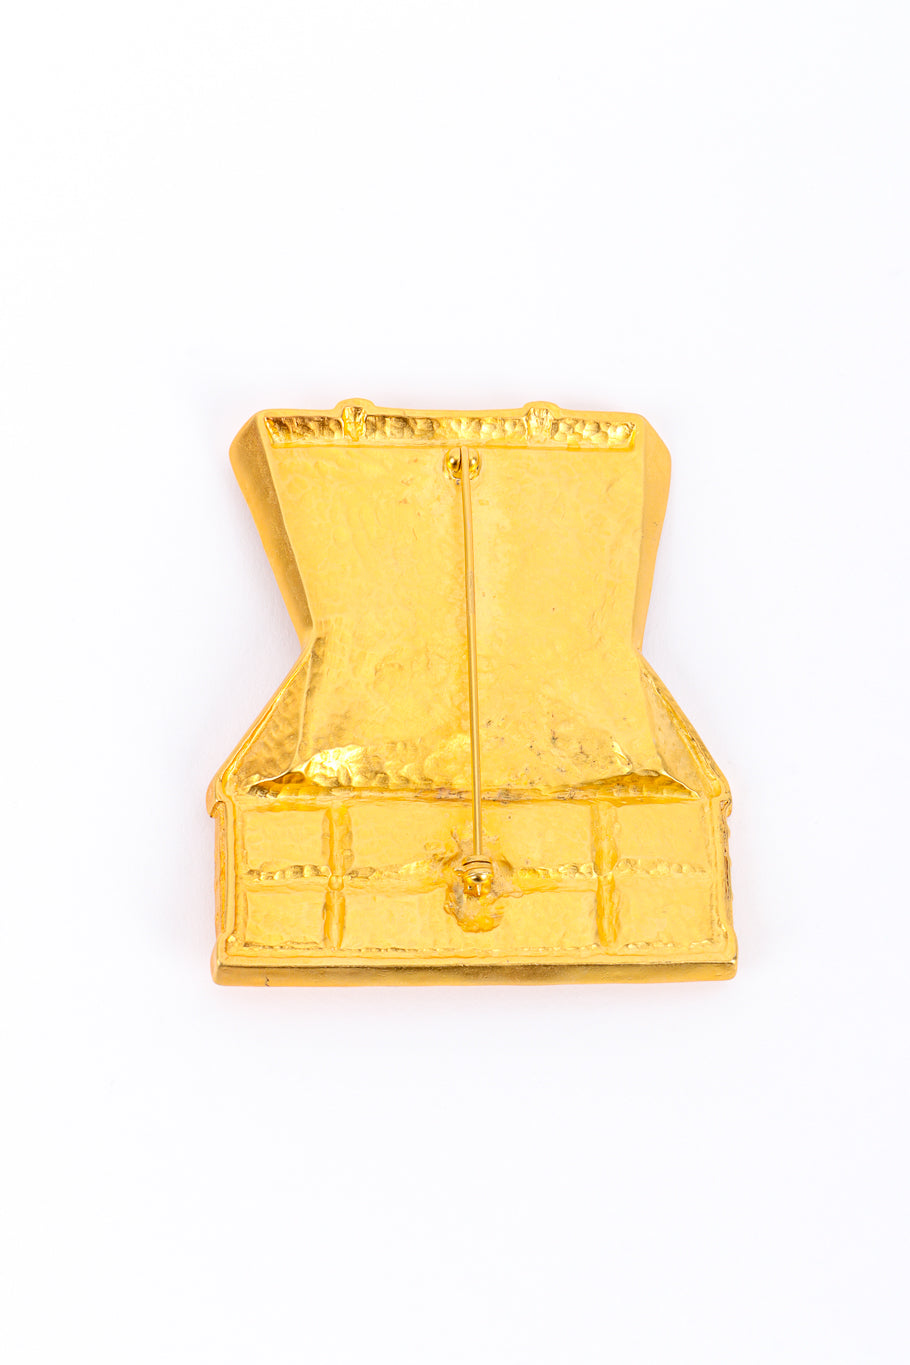 Vintage Karl Lagerfeld Treasure Chest Brooch back @recessla